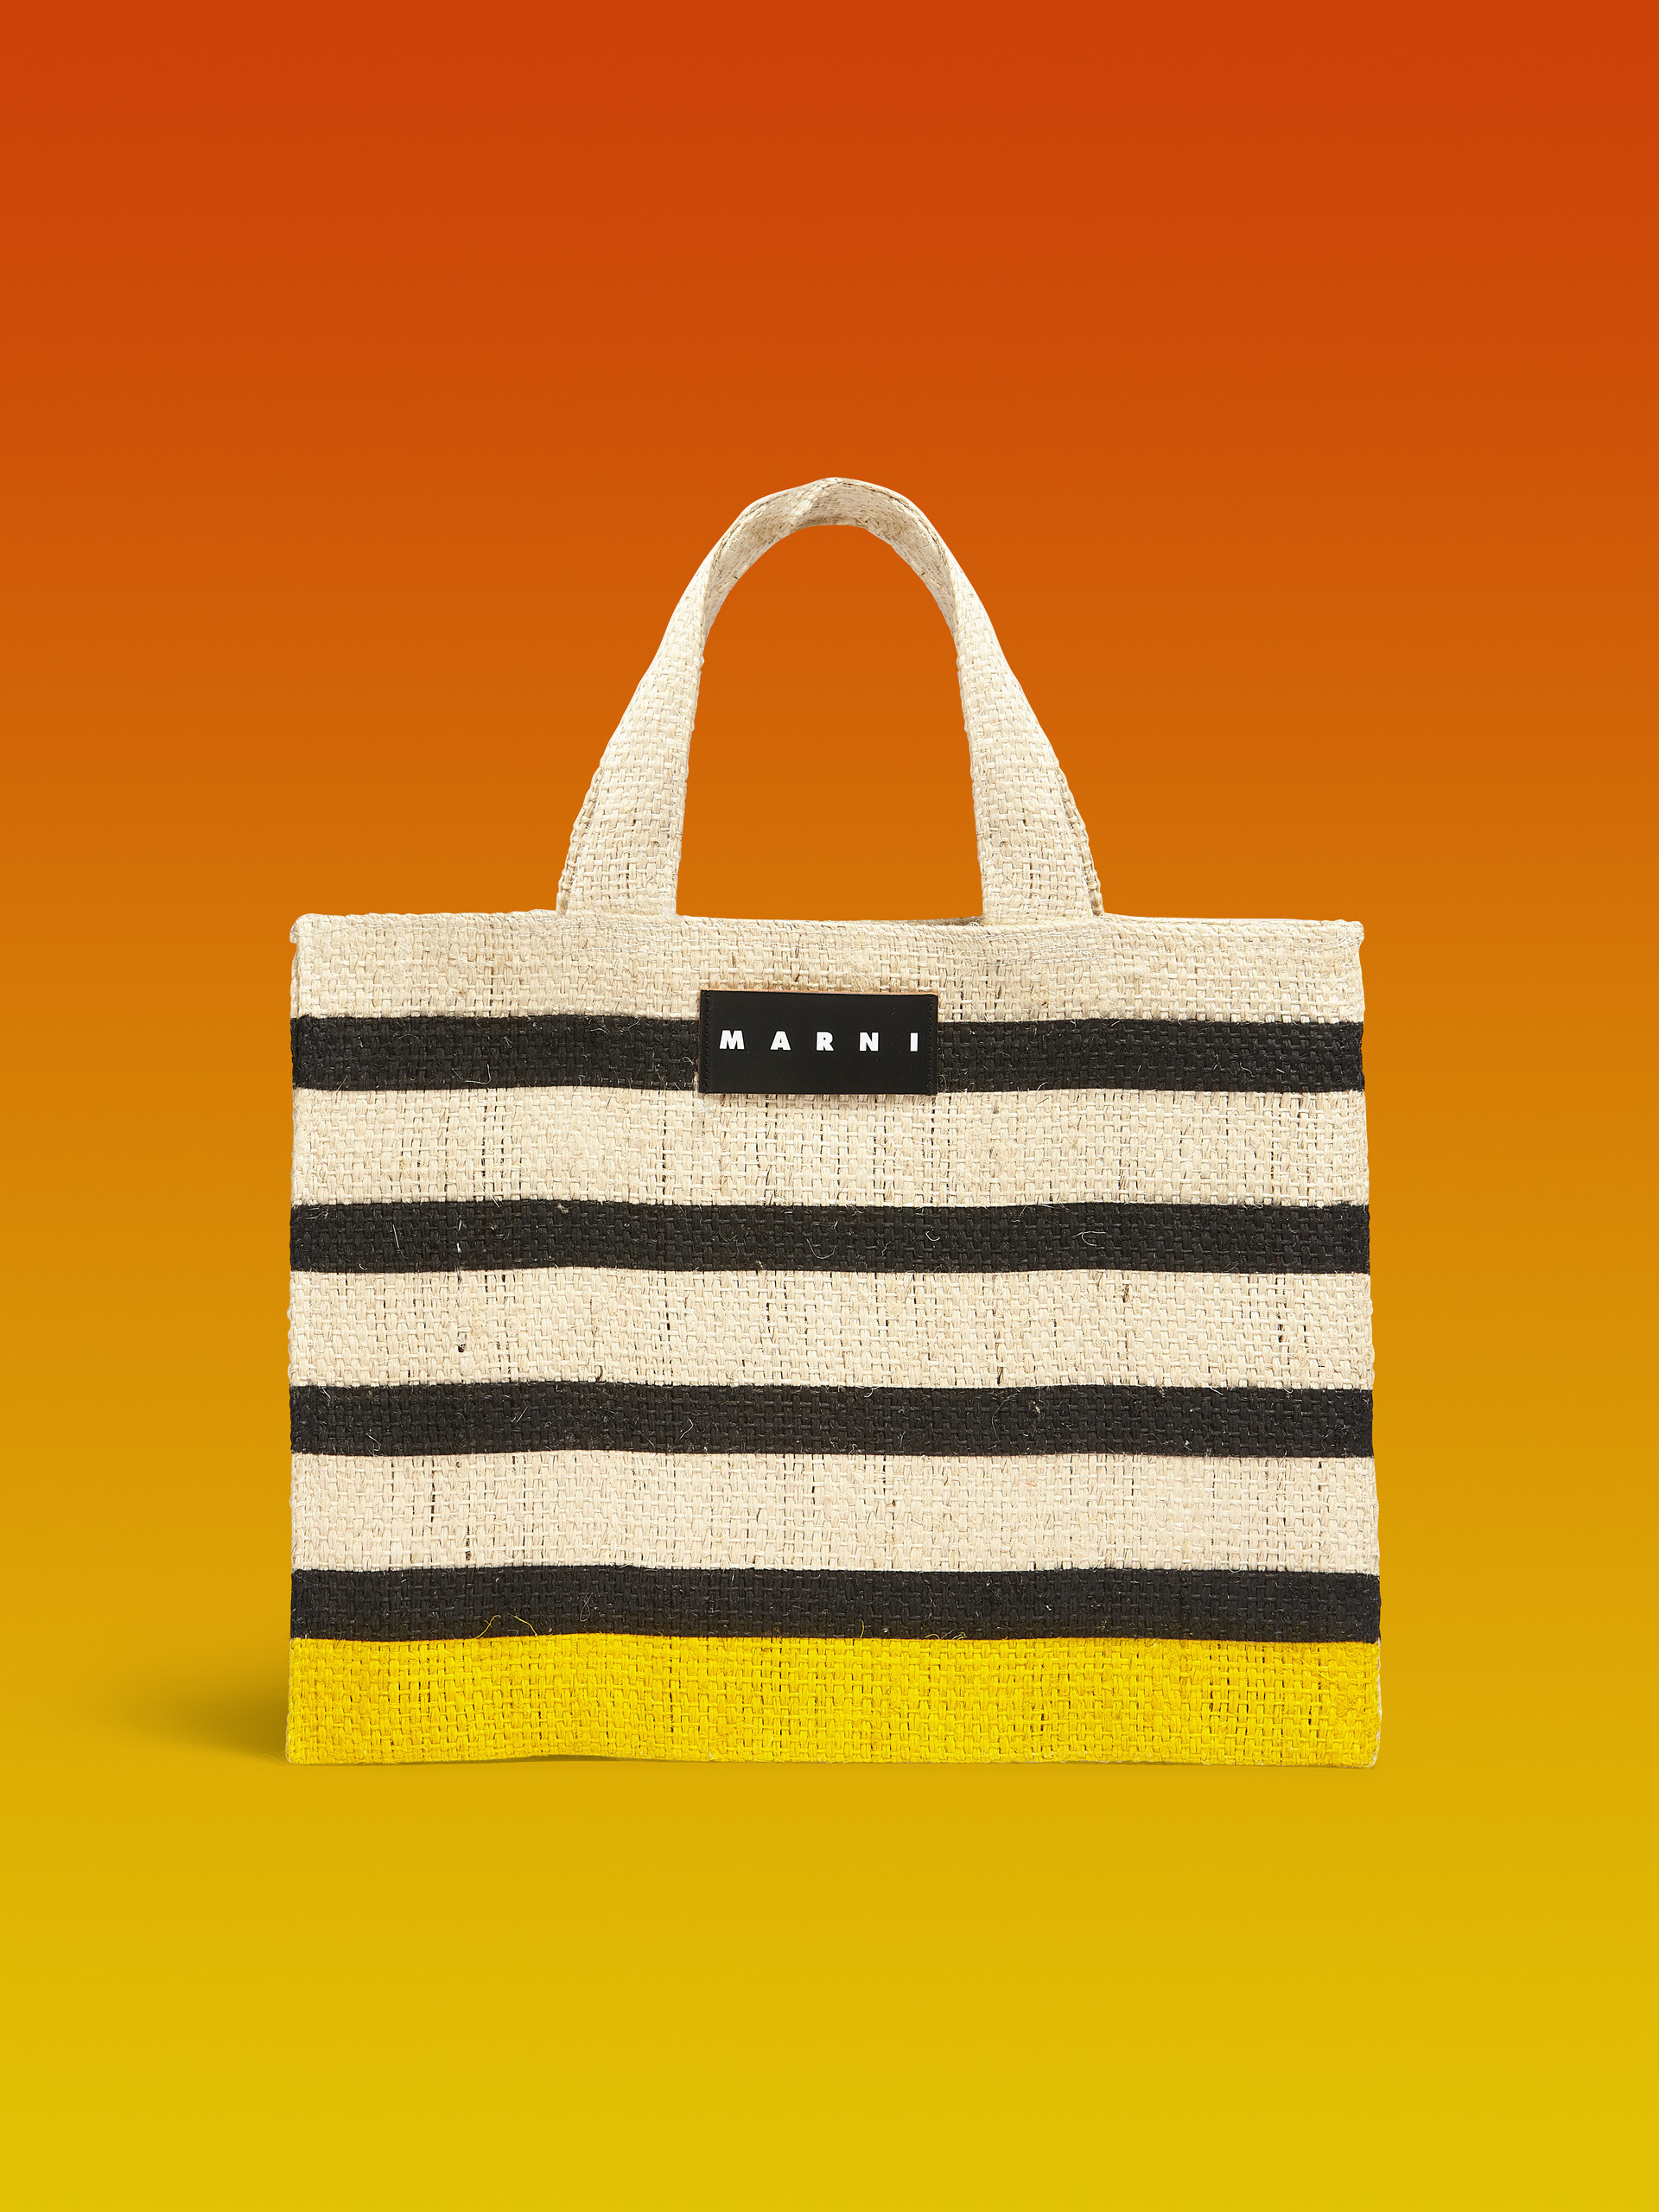 MARNI MARKET small bag in black and yellow natural fiber - Bags - Image 1